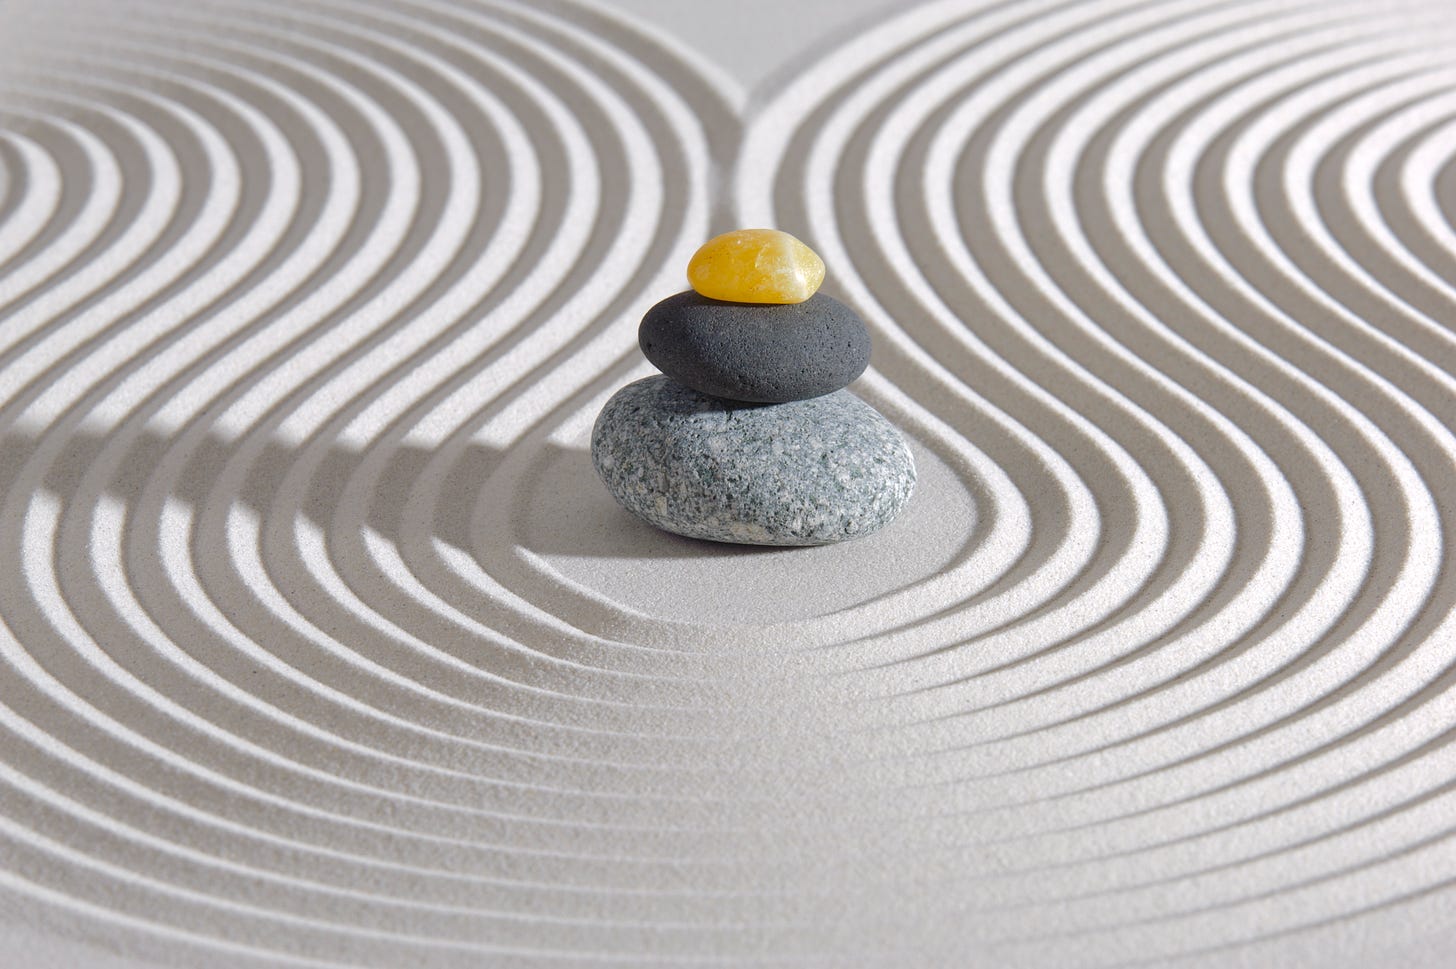 Zen meditation garden rocks in sand